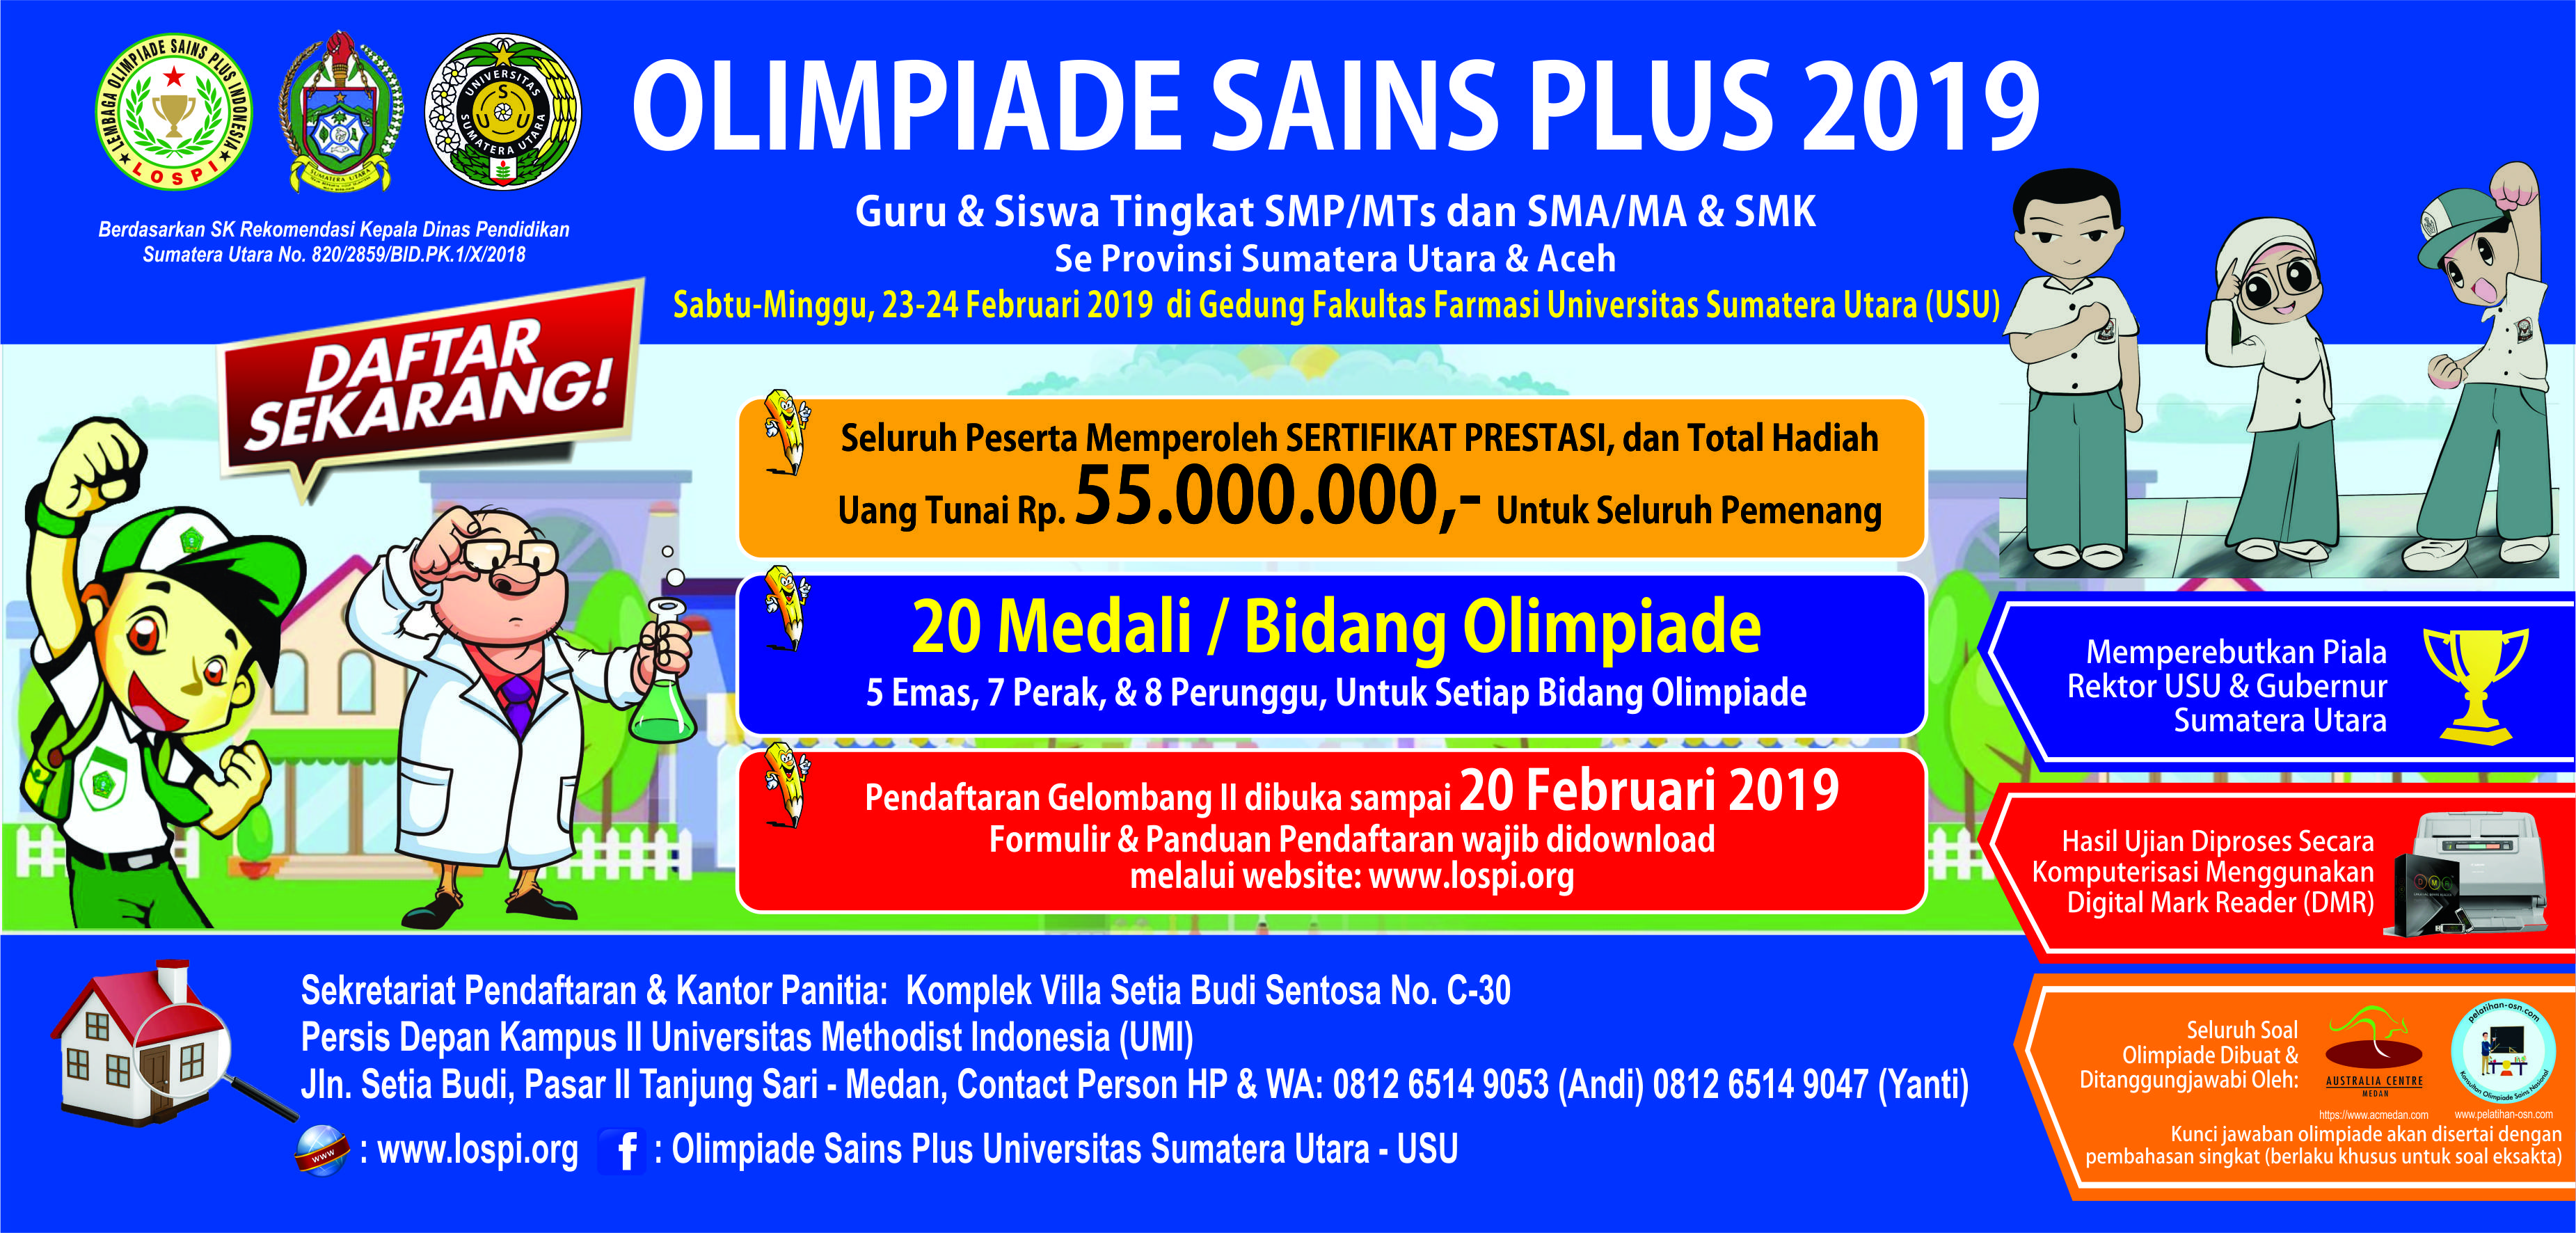 Olimpiade Sains Universitas Sumatera Utara 2019 Olimpiade Sains Guru & Siswa USU Medan